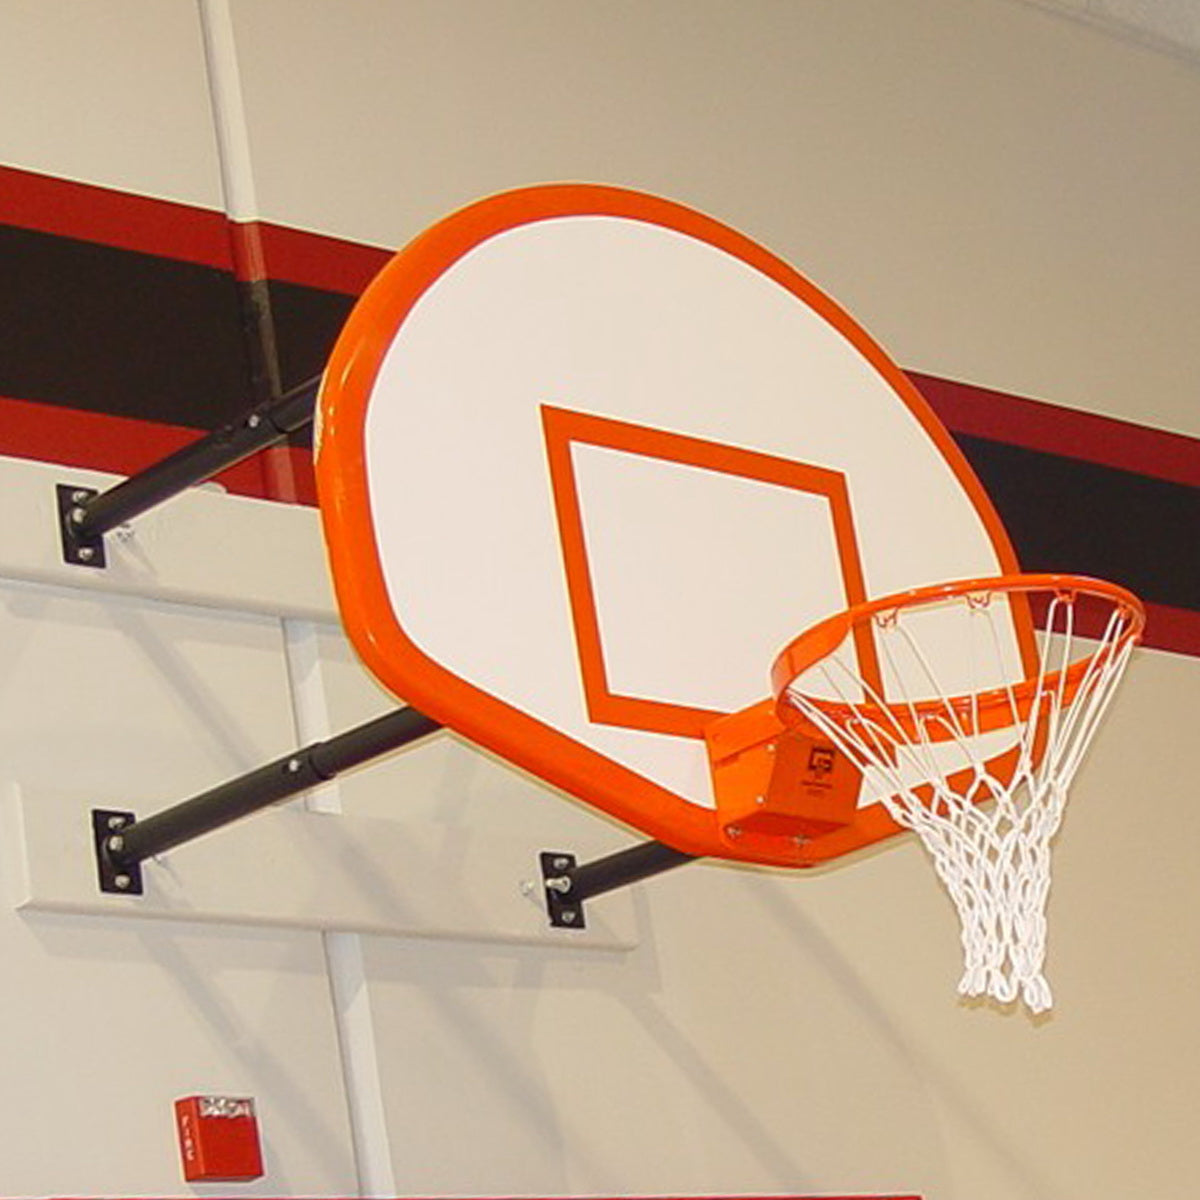 gared corner mount stationary wall mount basketball backstop 9' 12' length